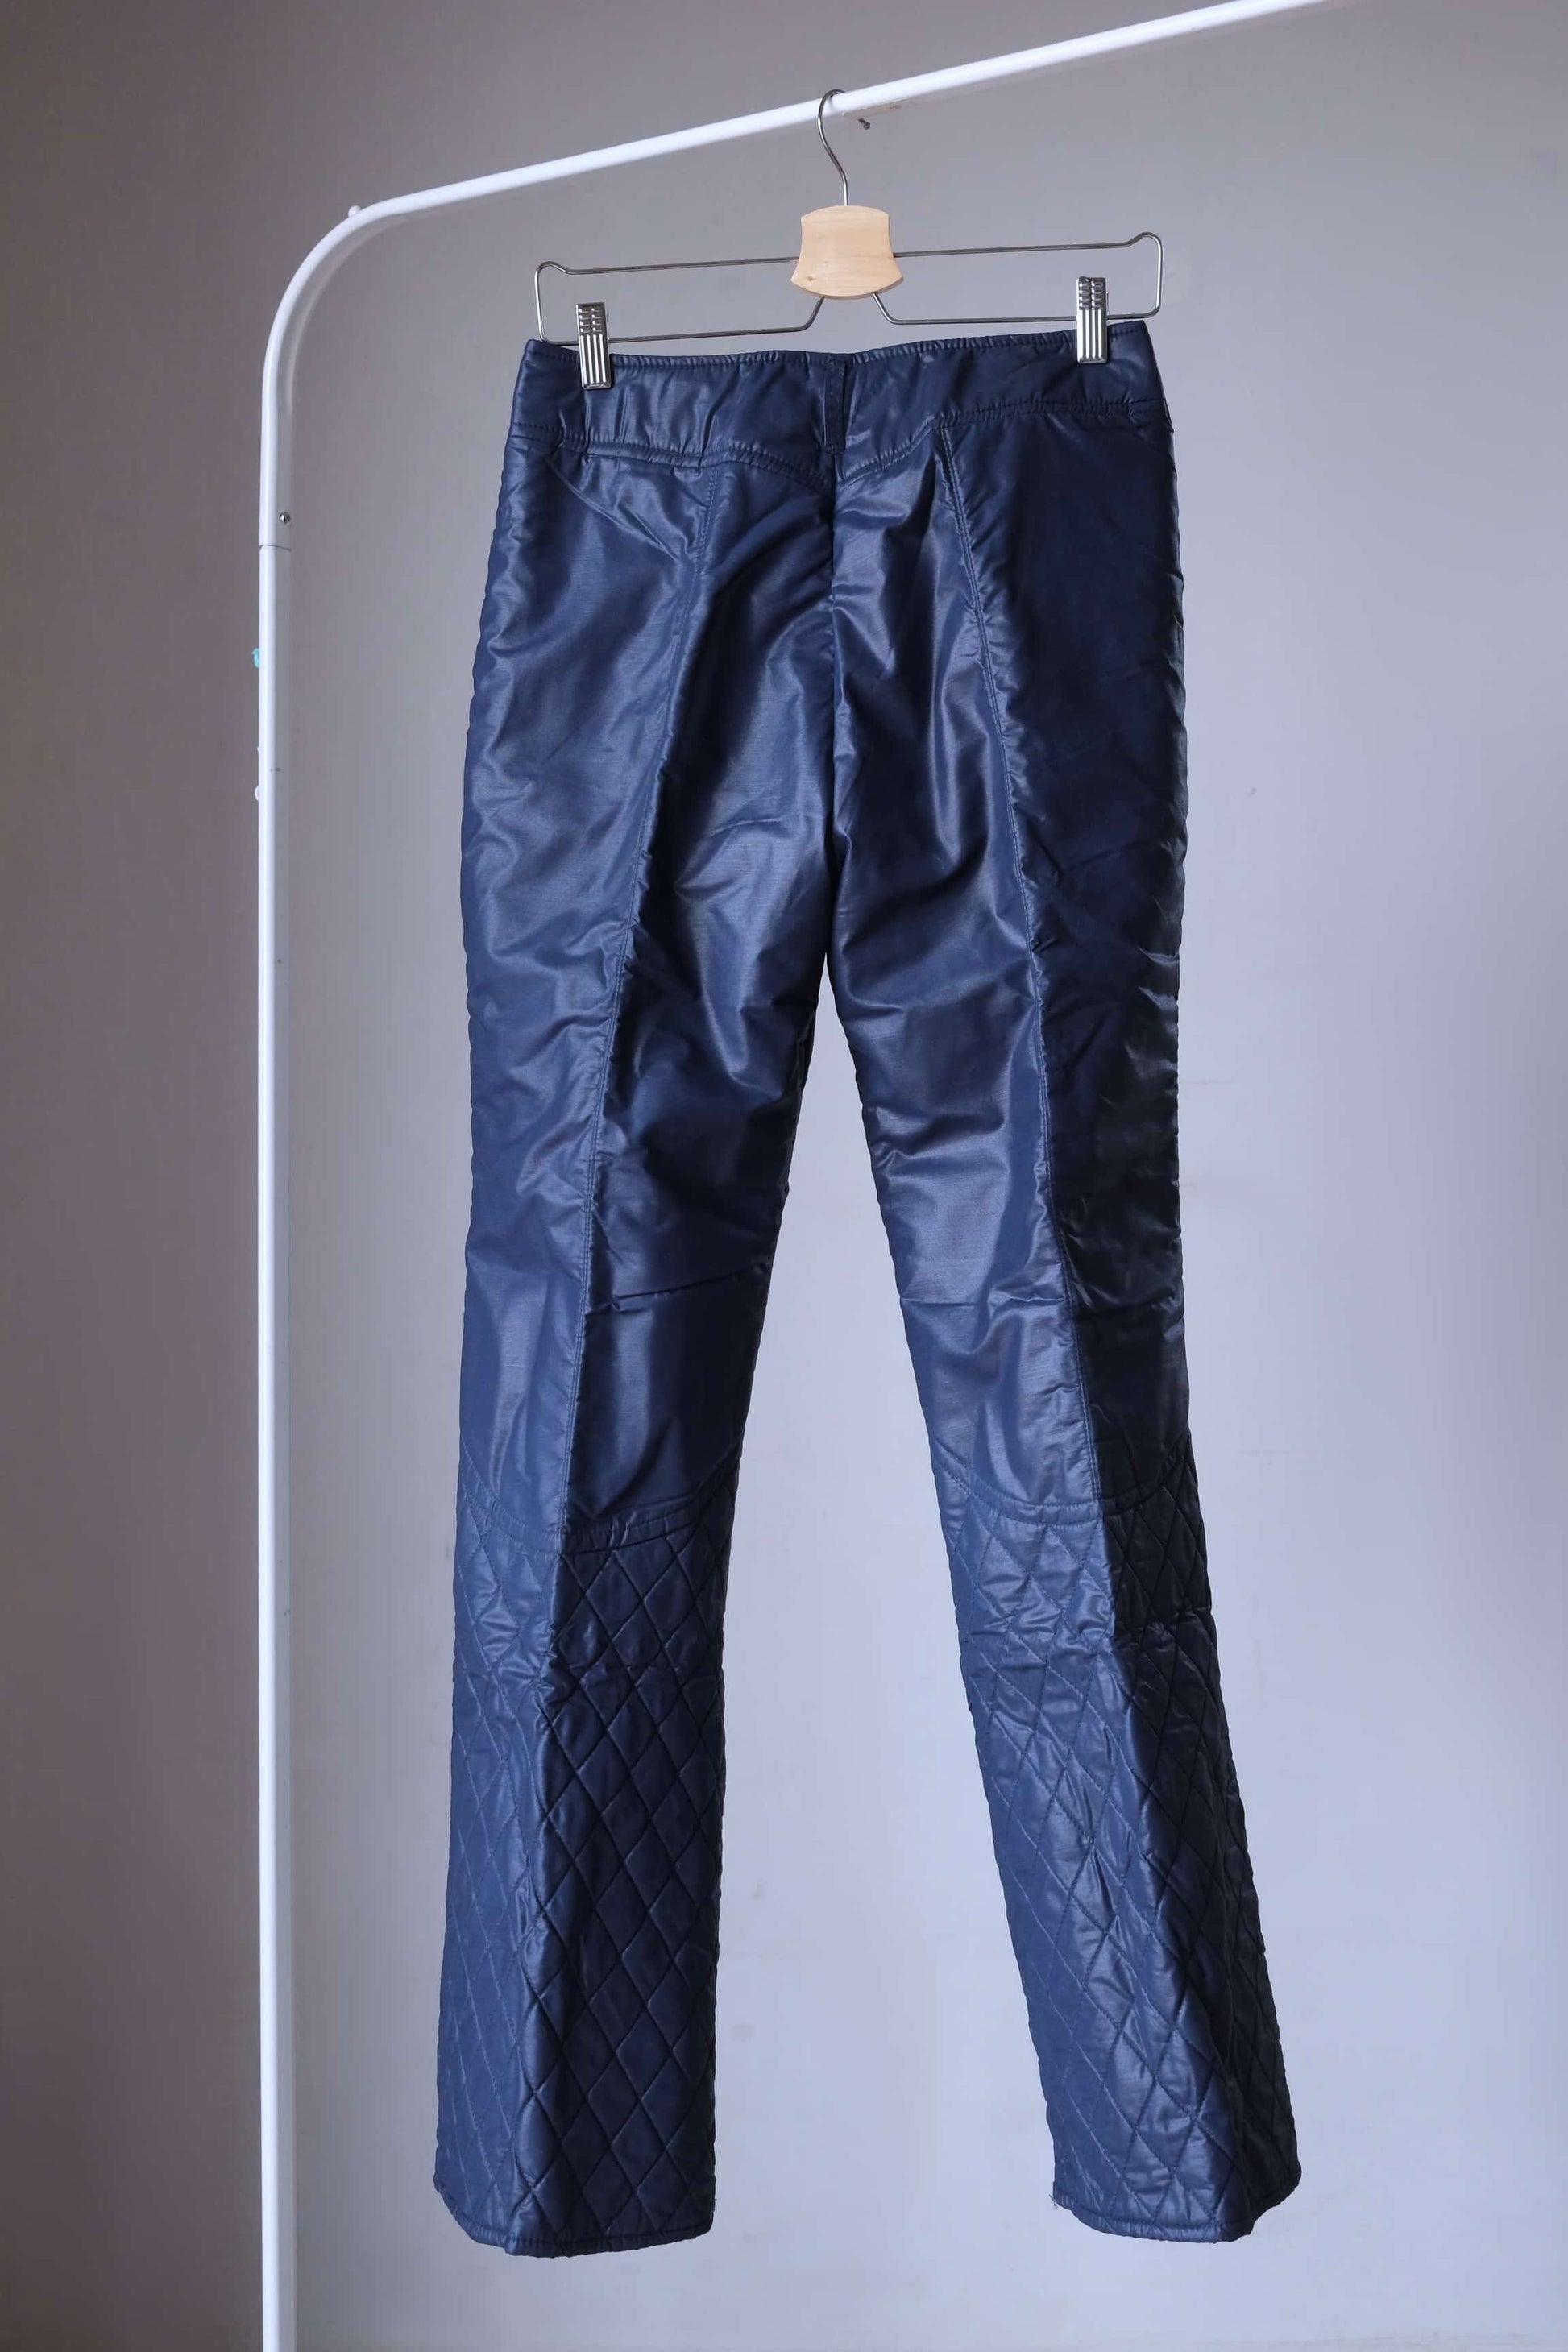 Back view of Vintage navy ski pants of 2-peice ski suit on hanger